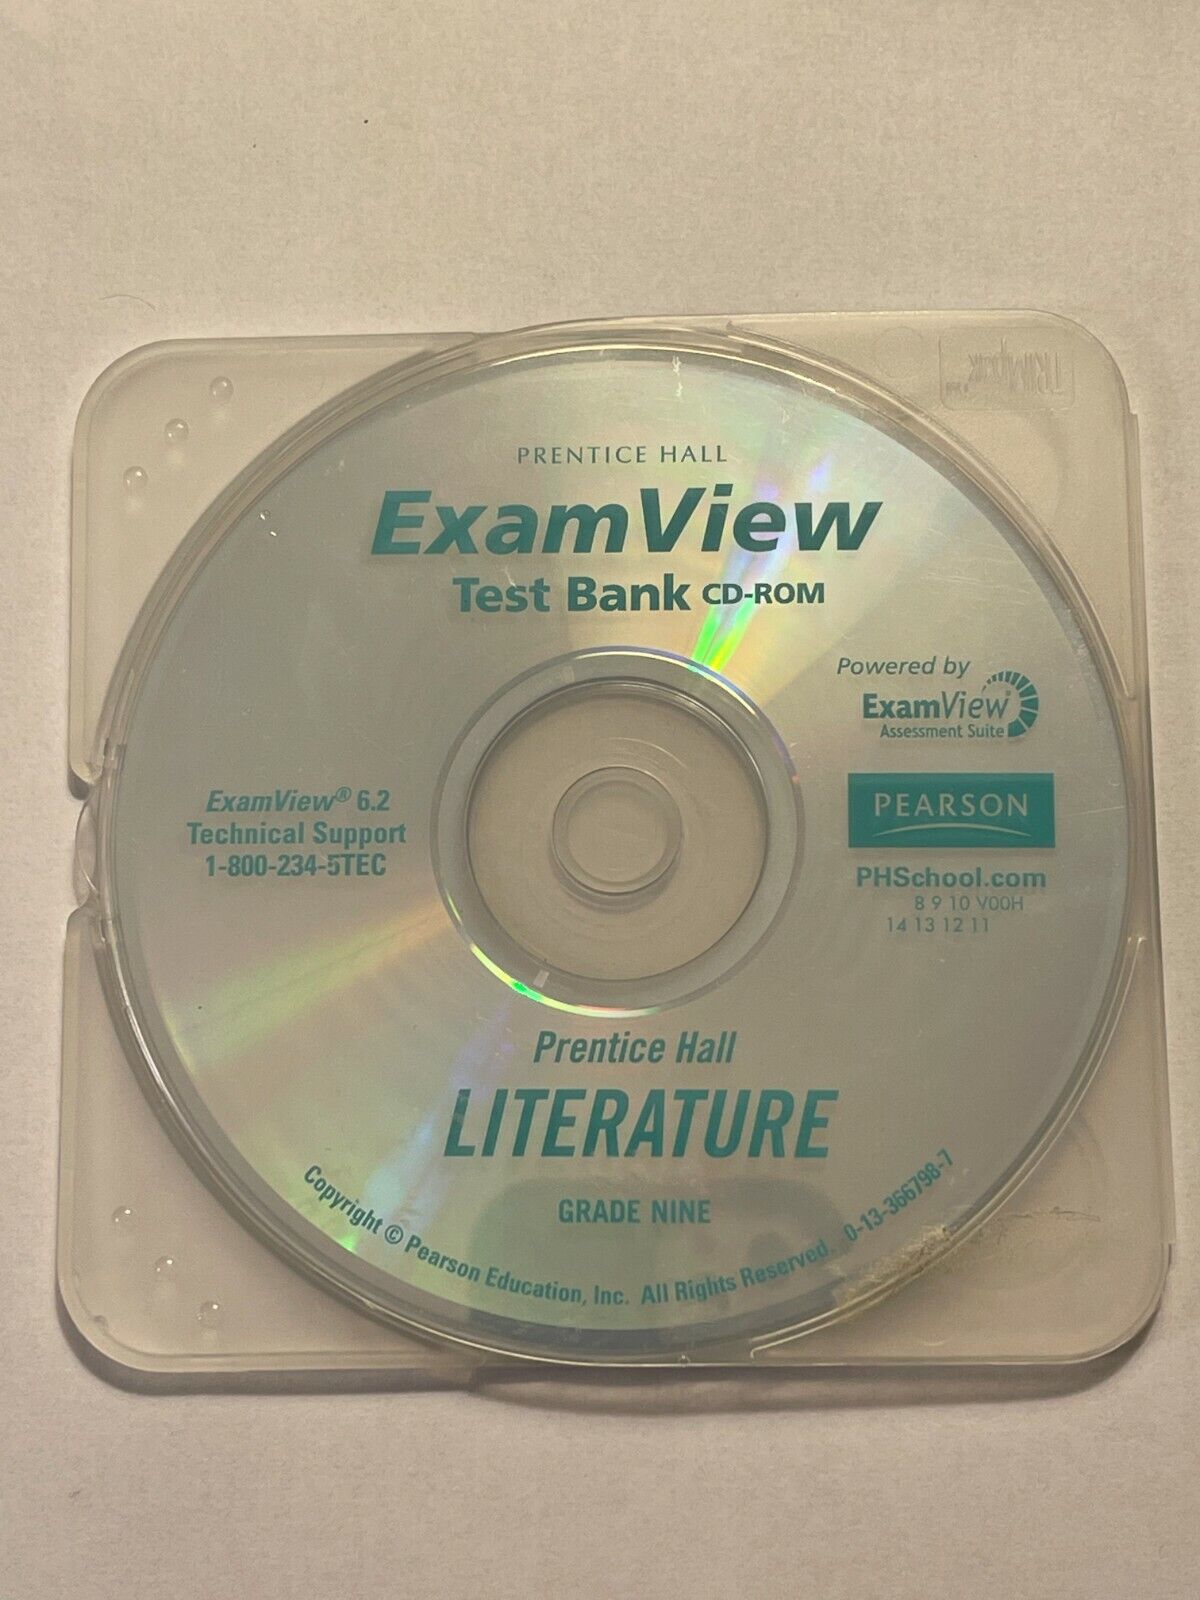 Prentice Hall Examview Test Bank CD-ROM Literature Grade 9